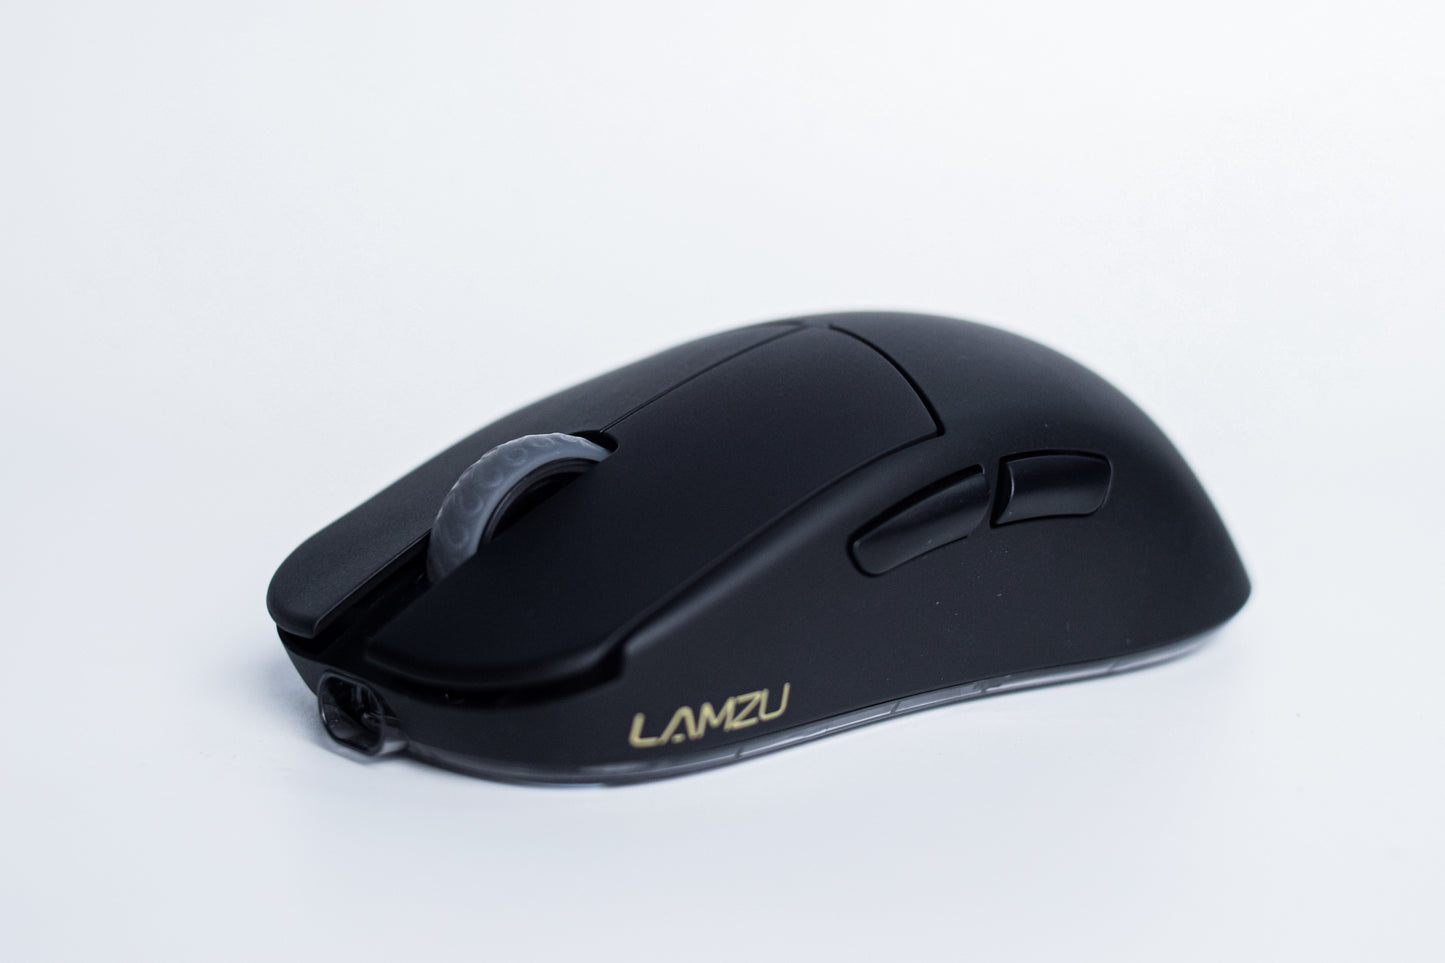 Lamzu Atlantis Mini Superlight Wireless Gaming Mouse